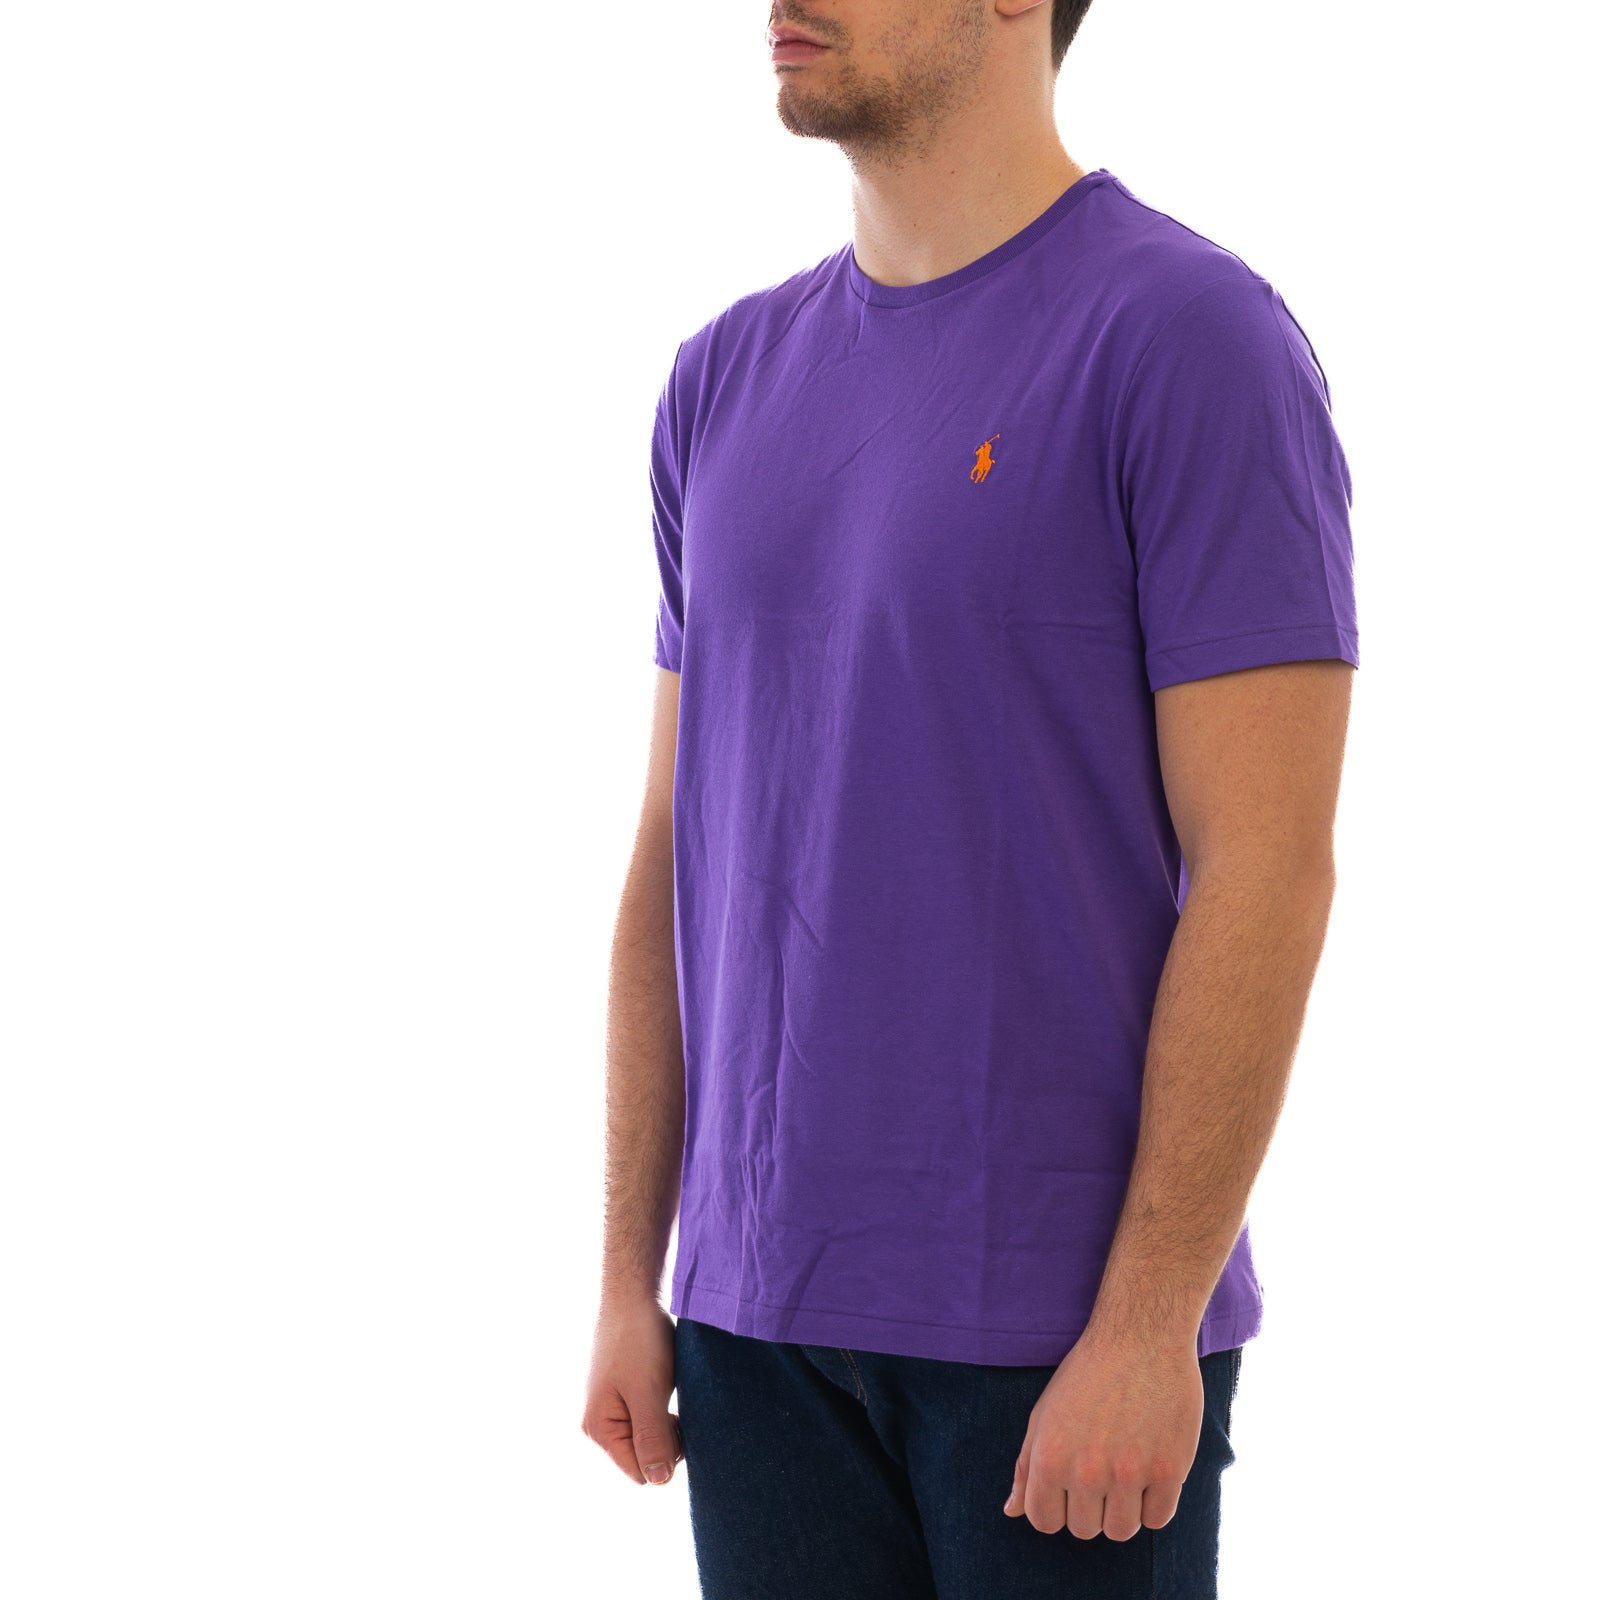 T-shirt POLO RALPH LAUREN
Tie purple